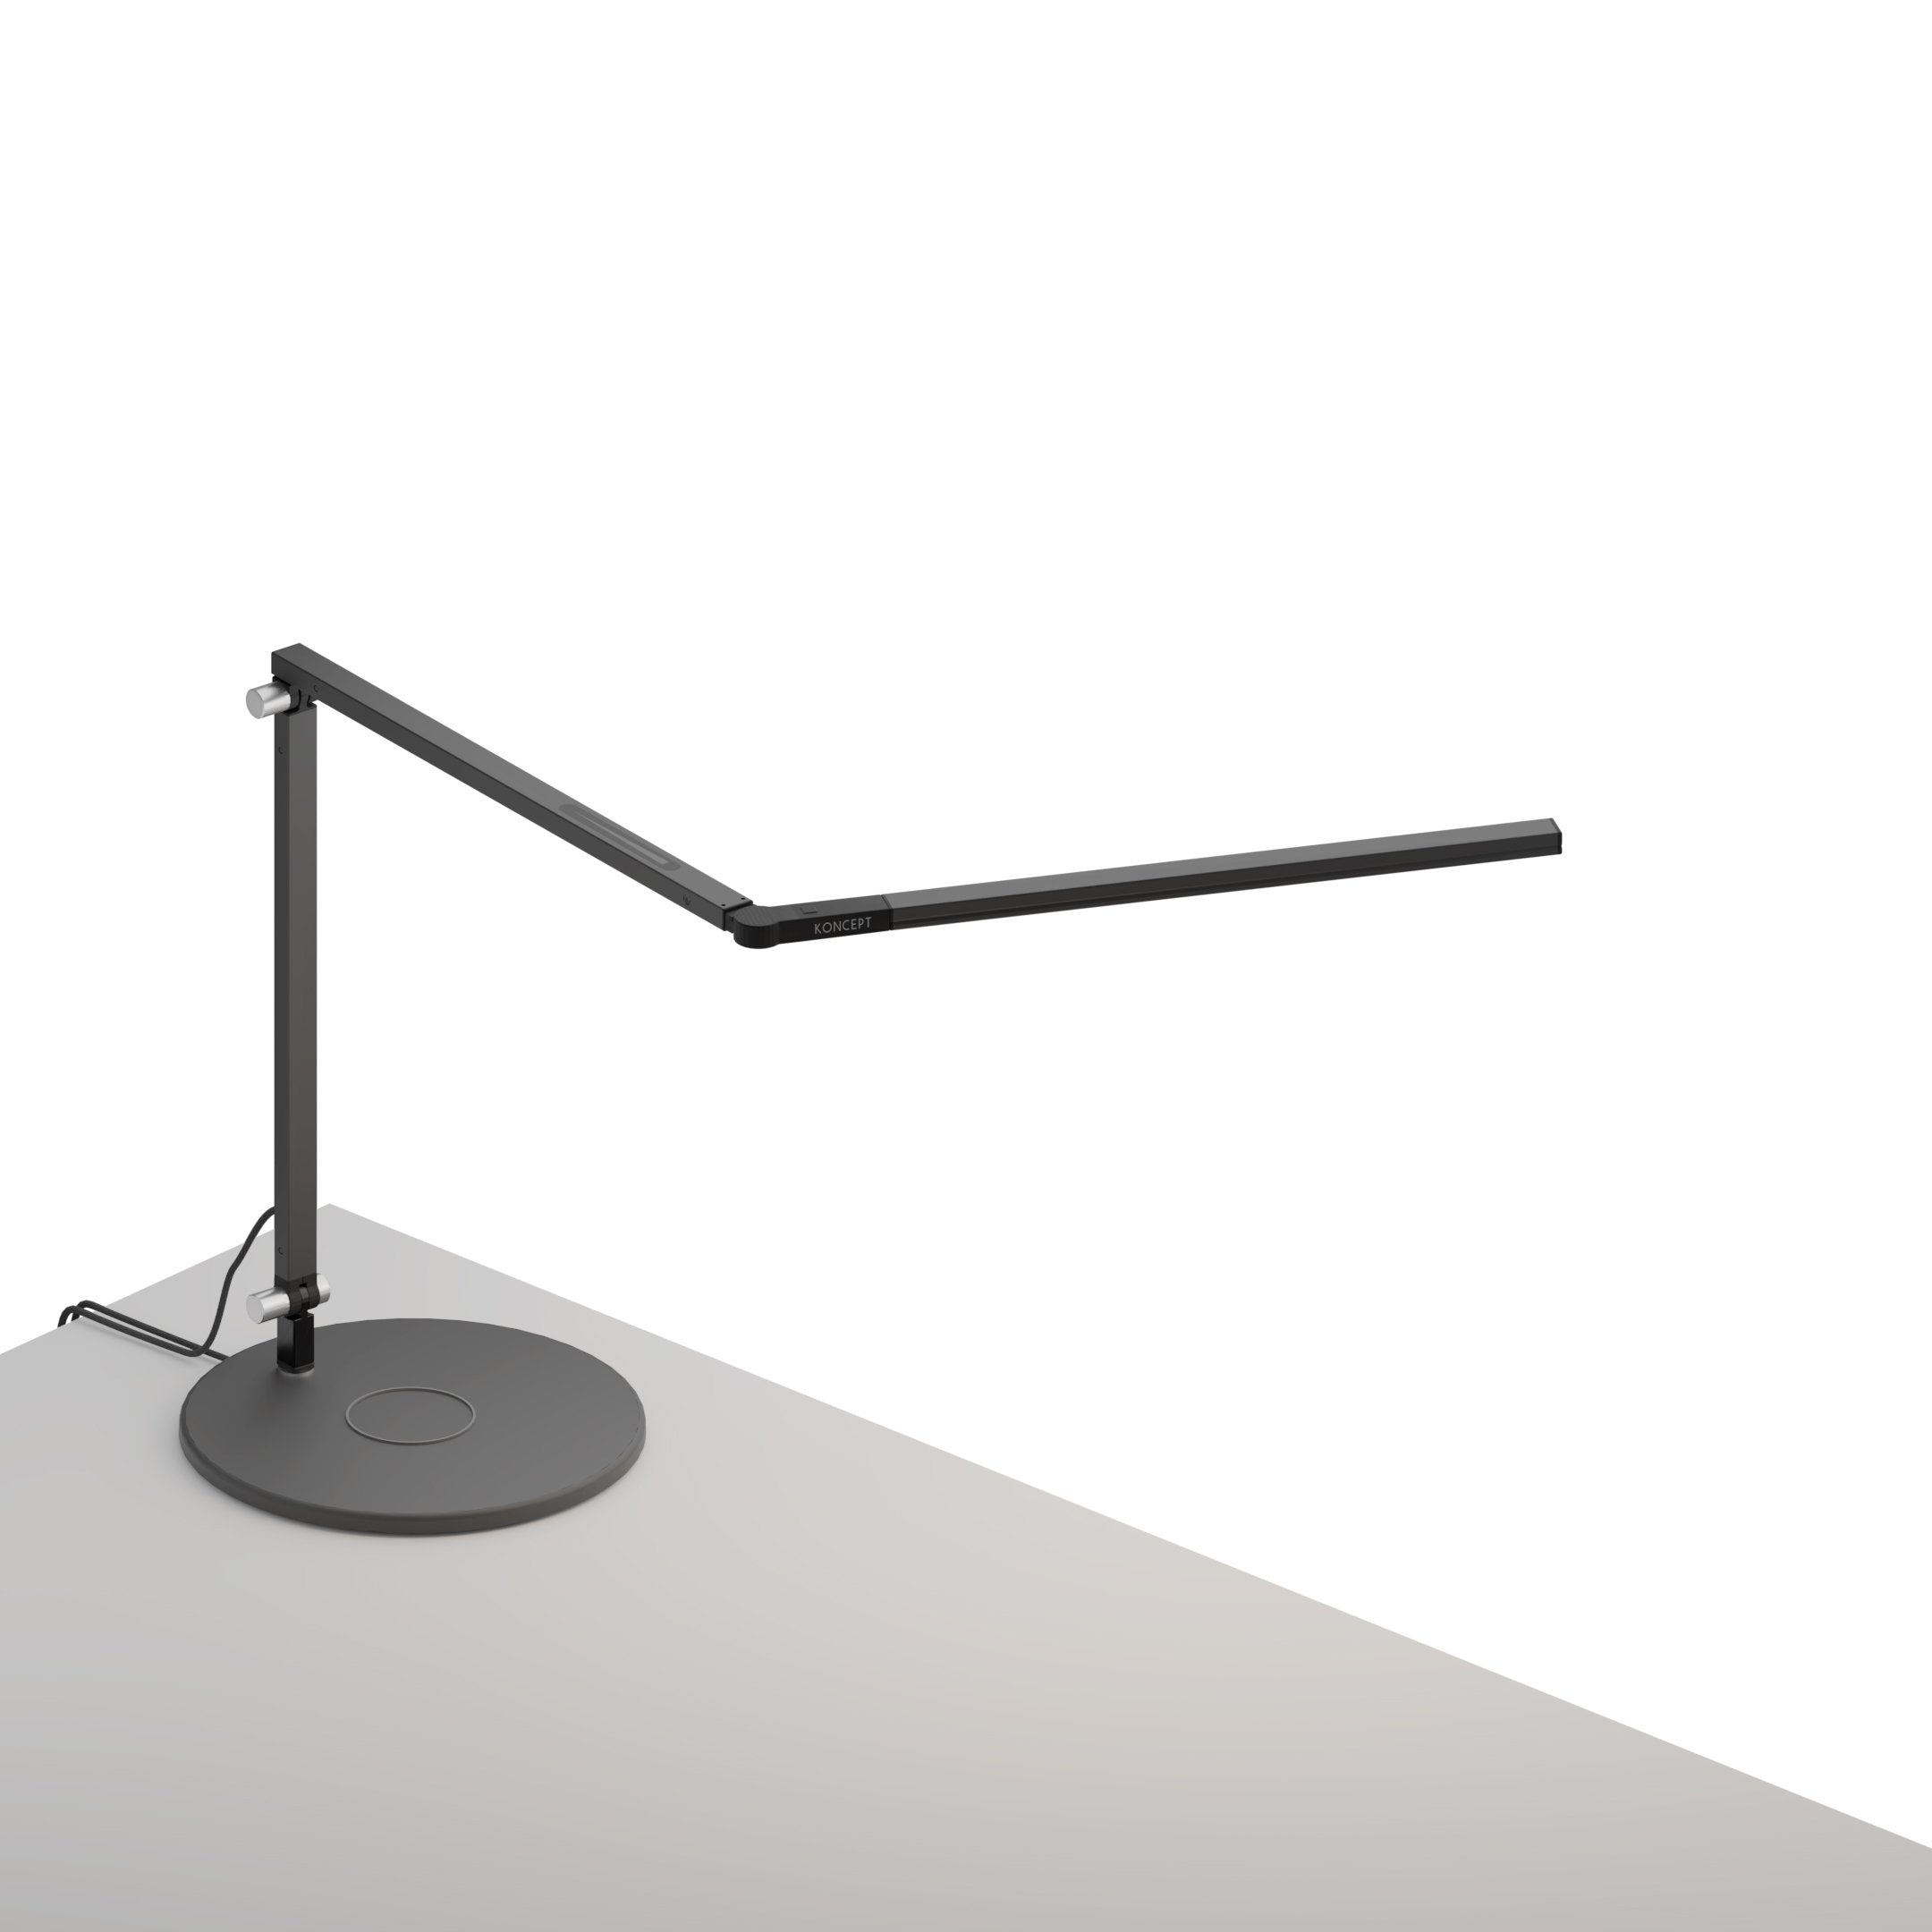 Koncept Desk Lamps Z-Bar mini Desk Lamp with wireless charging Qi Base (Warm Light; Metallic Black)